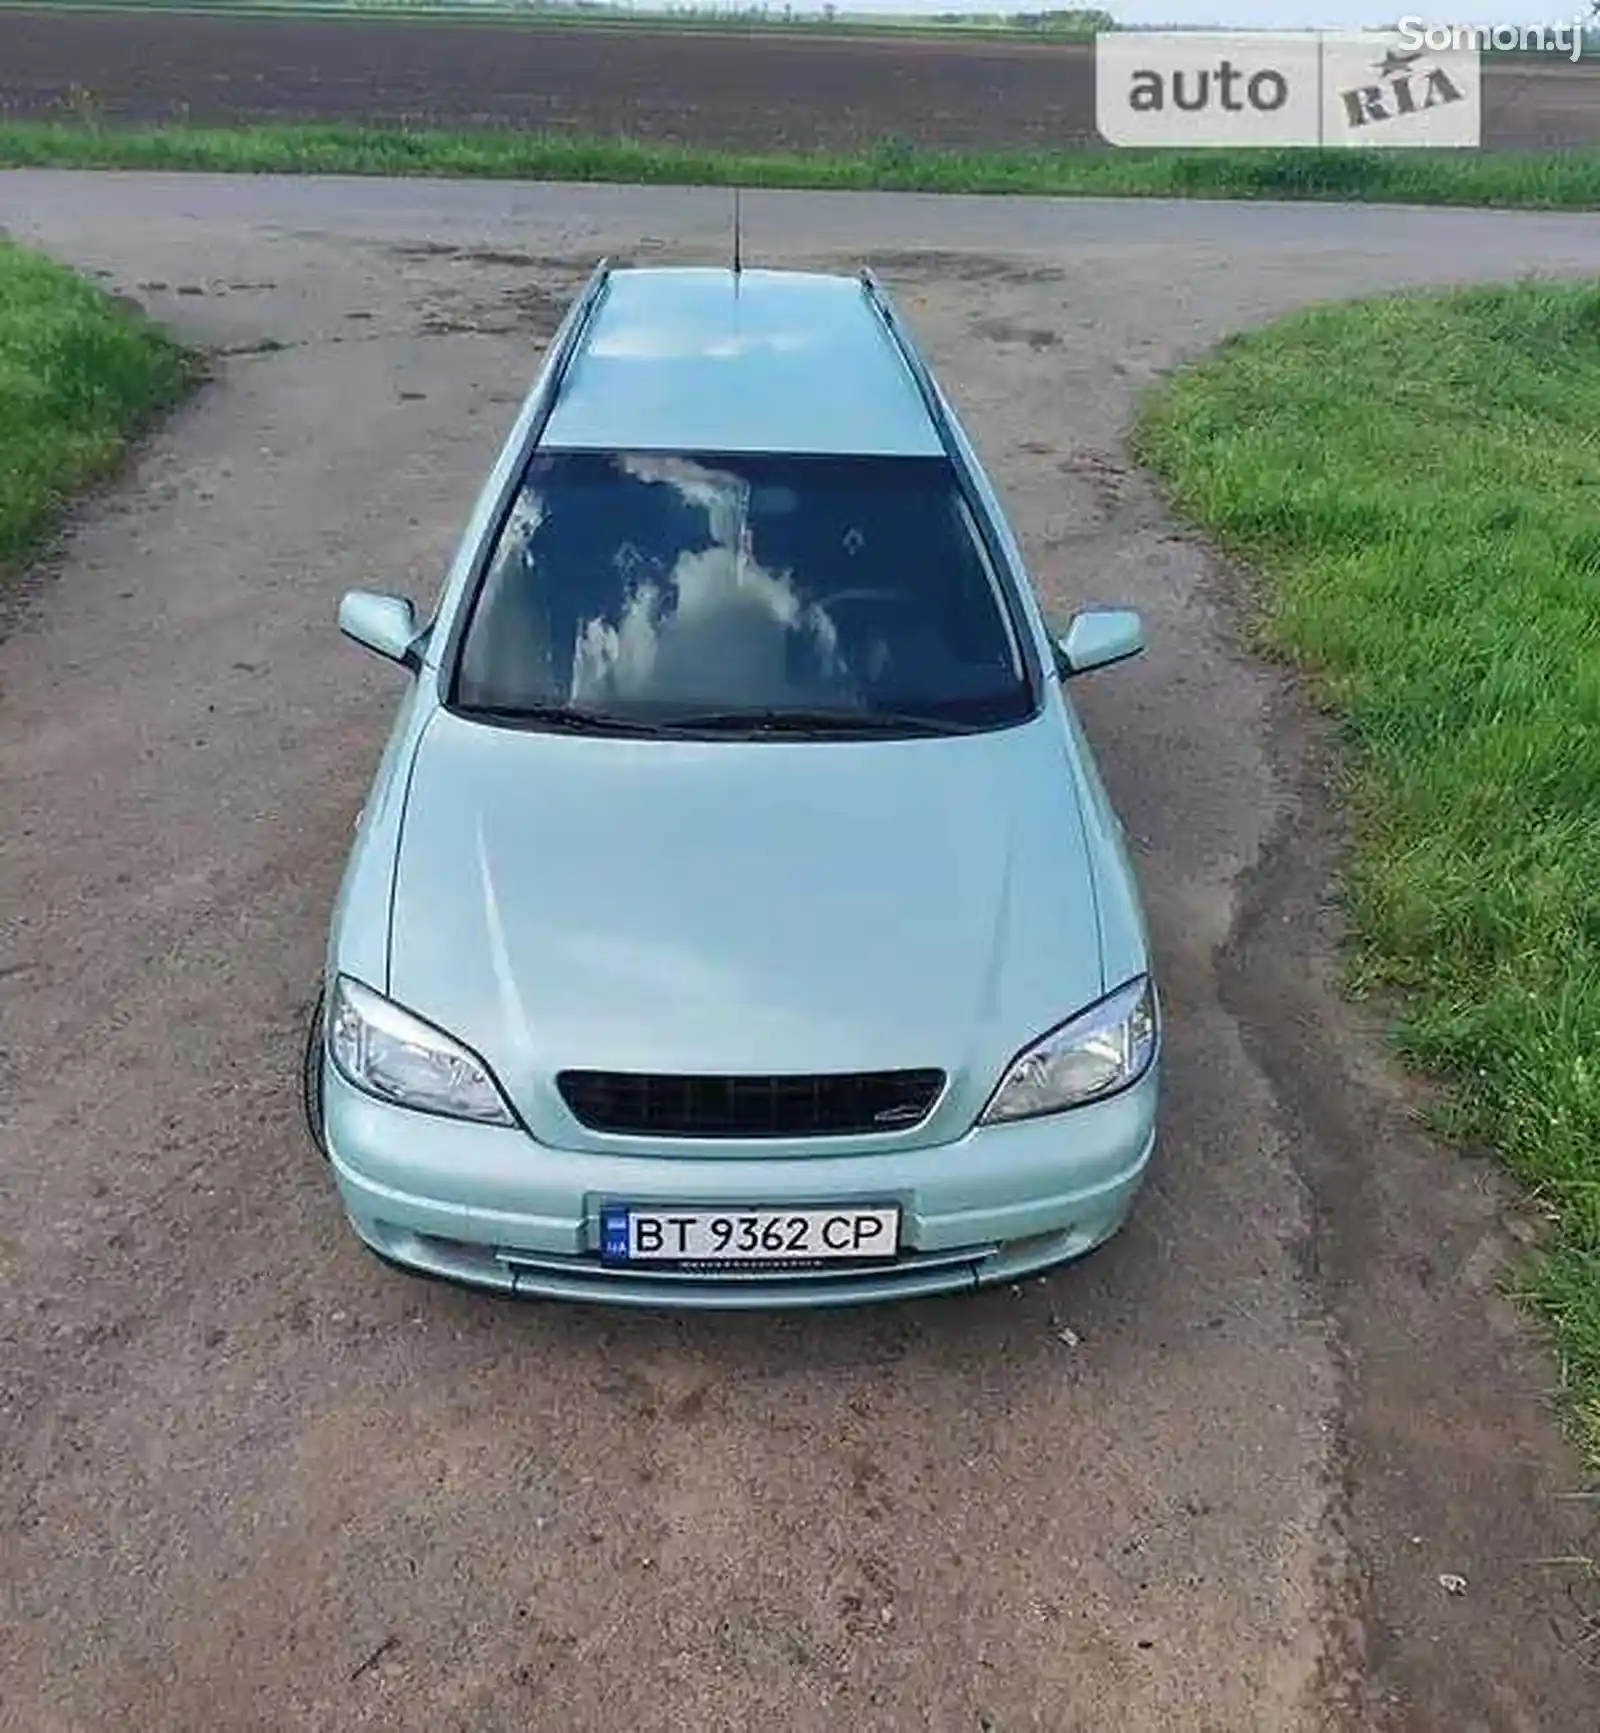 Лобовое стекло от Opel Astra G-2